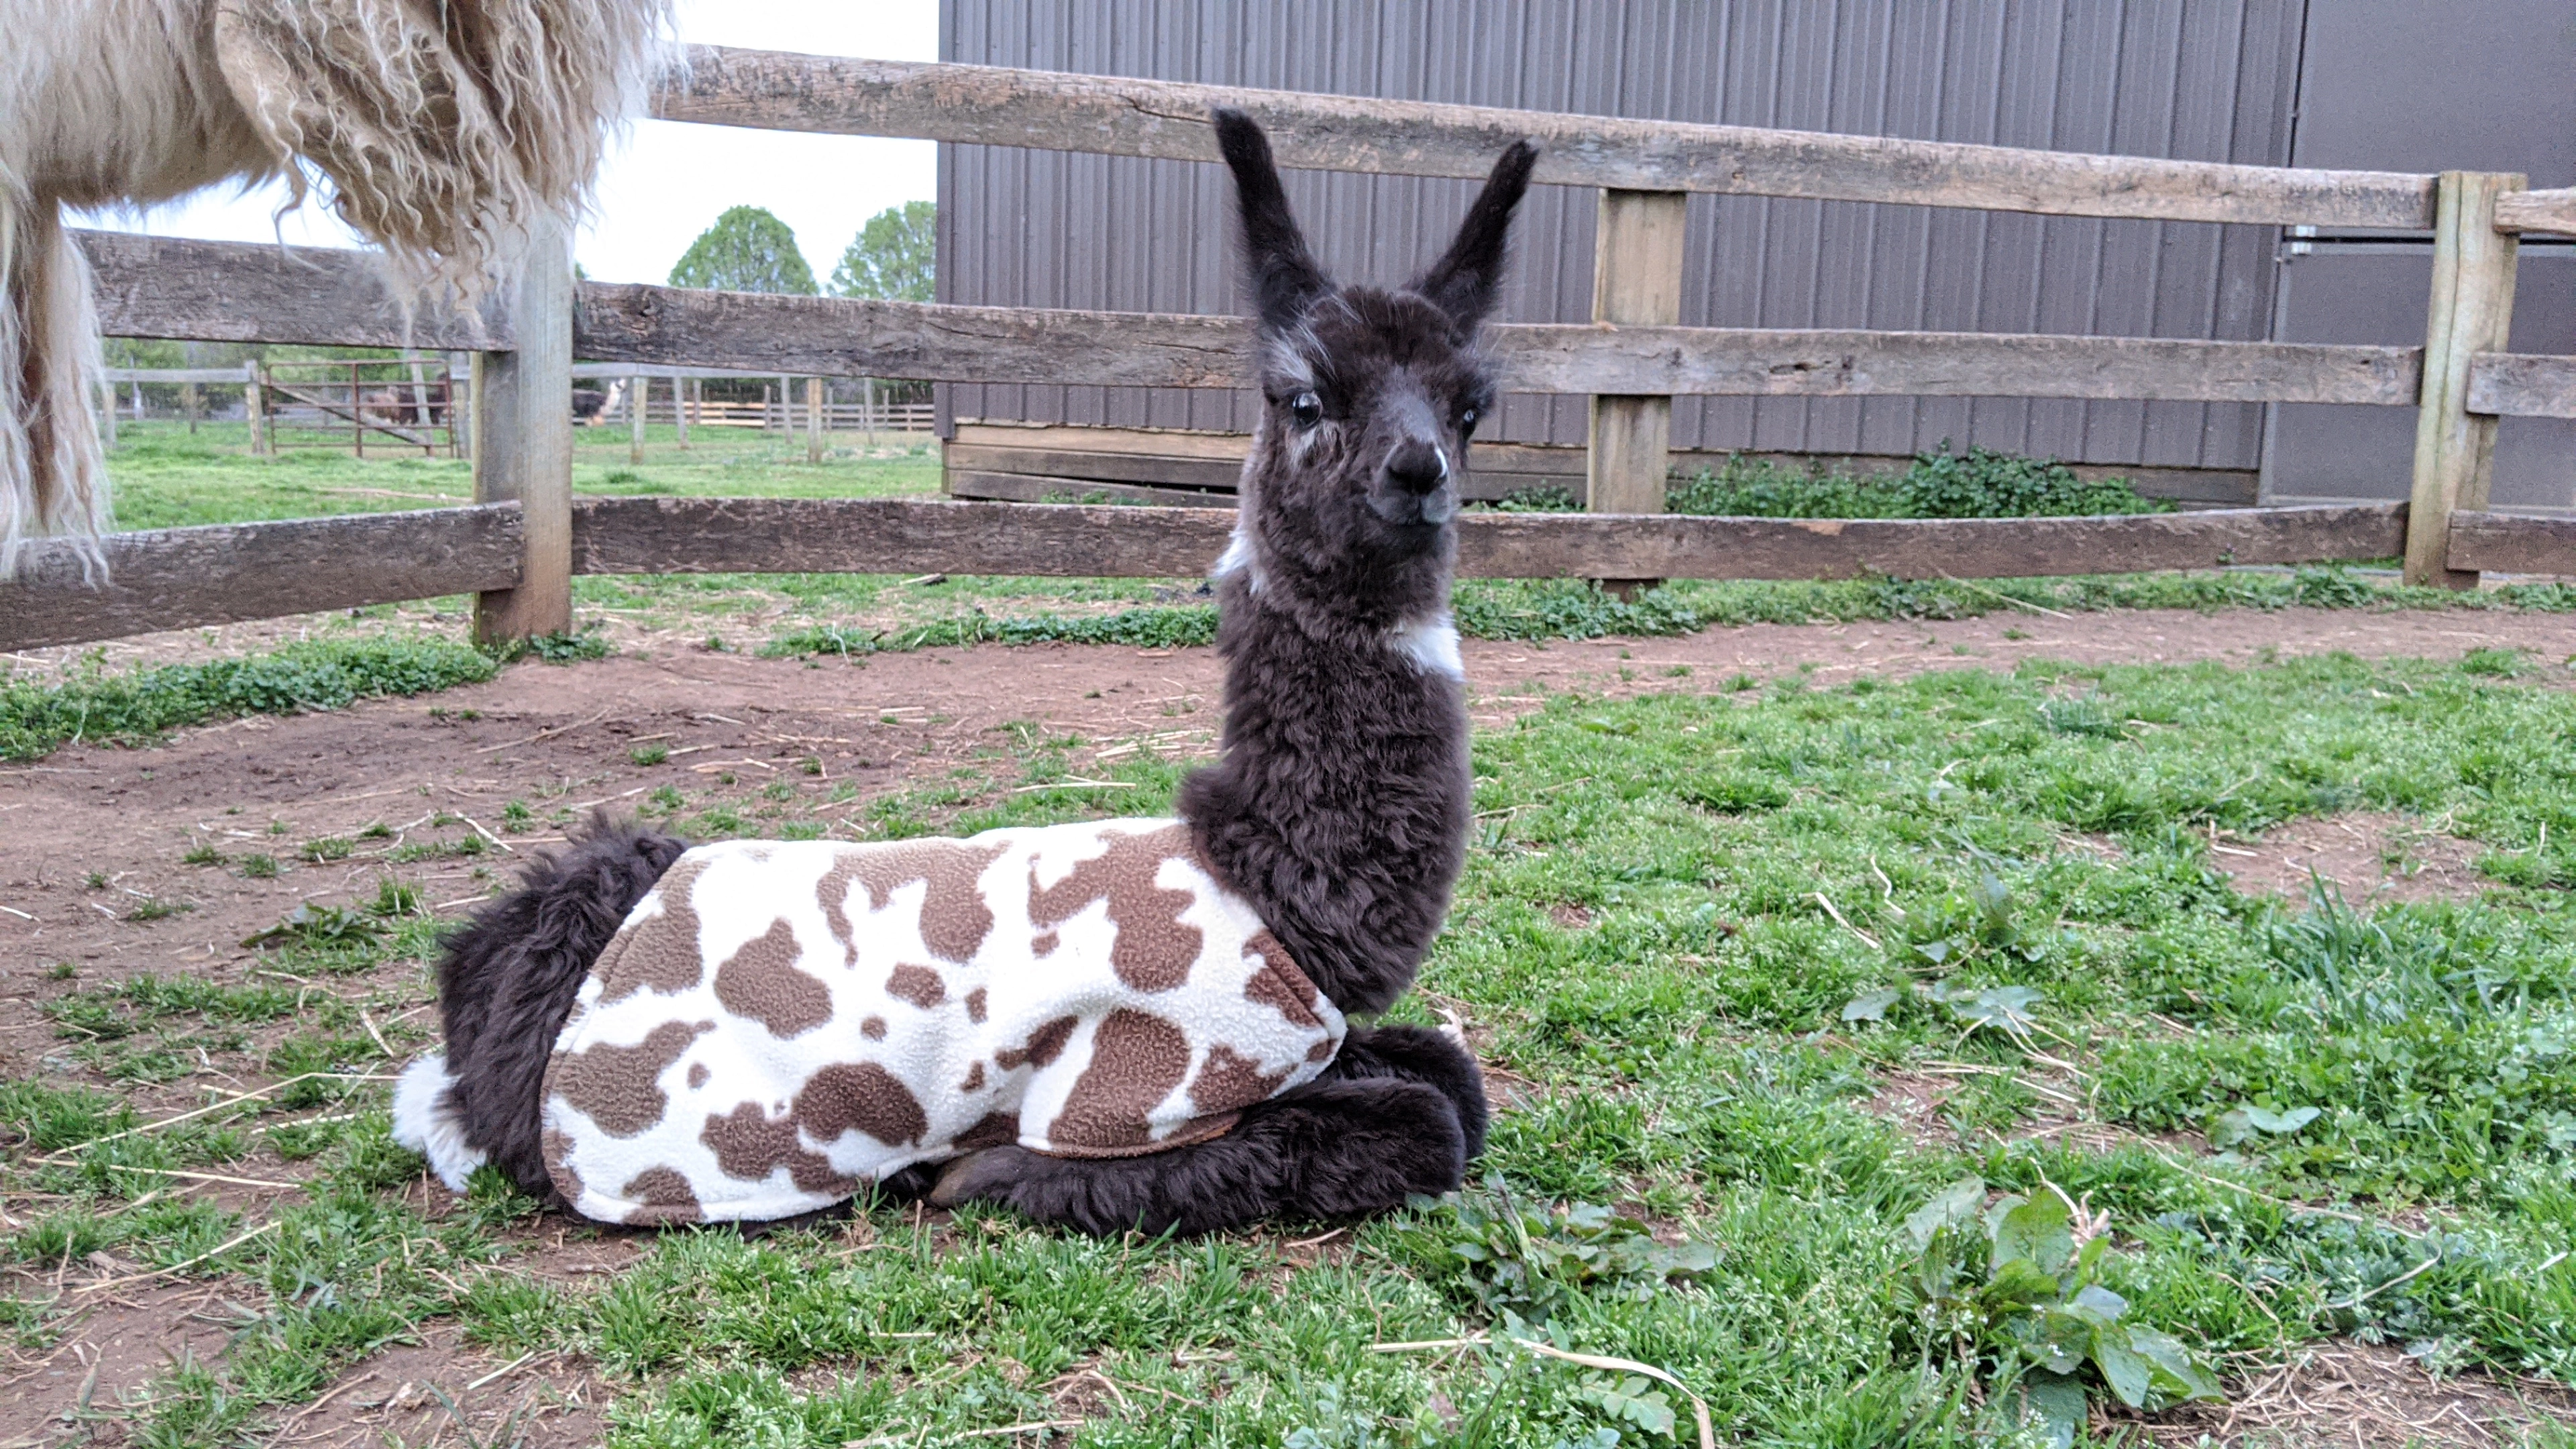 An image of a newborn llama named "OK Boomer"